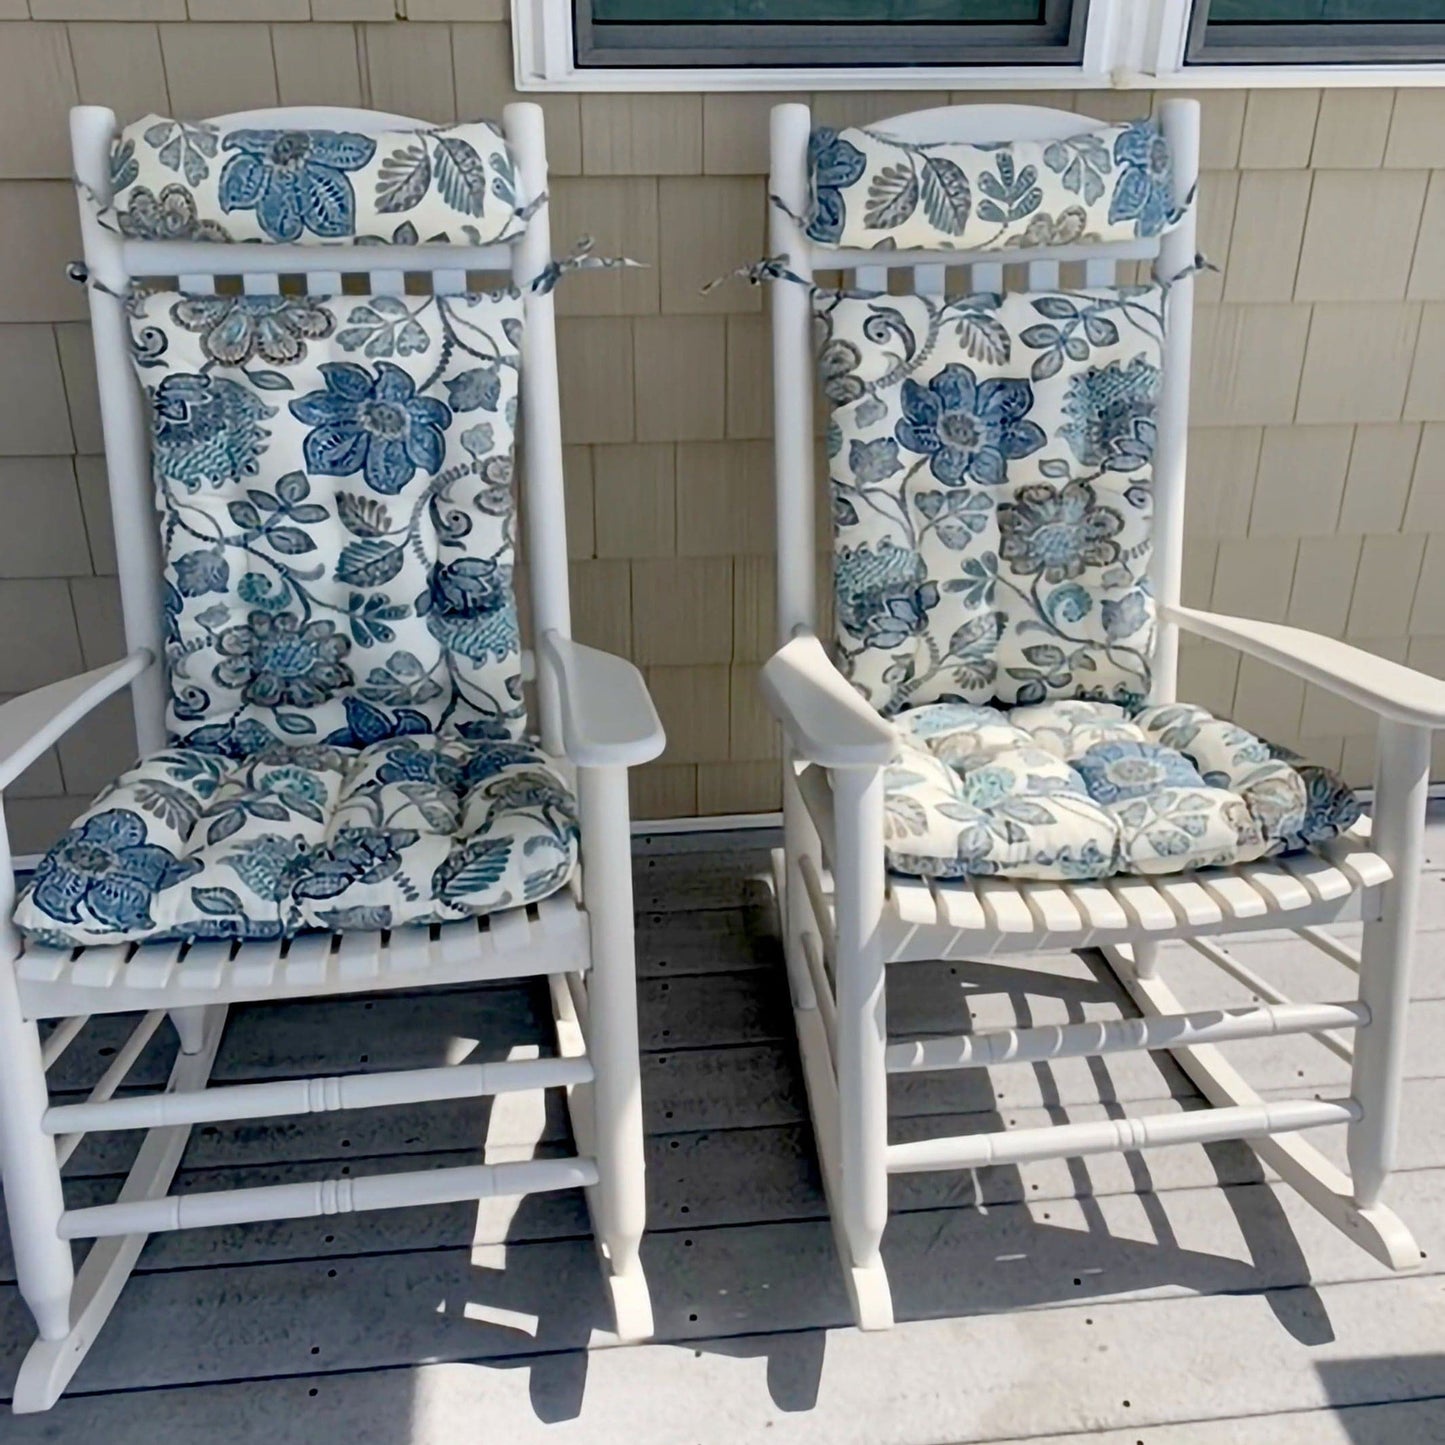 Boutique Blue Floral Rocking Chair Cushions - Barnett Home Decor - Blue, Gray, White